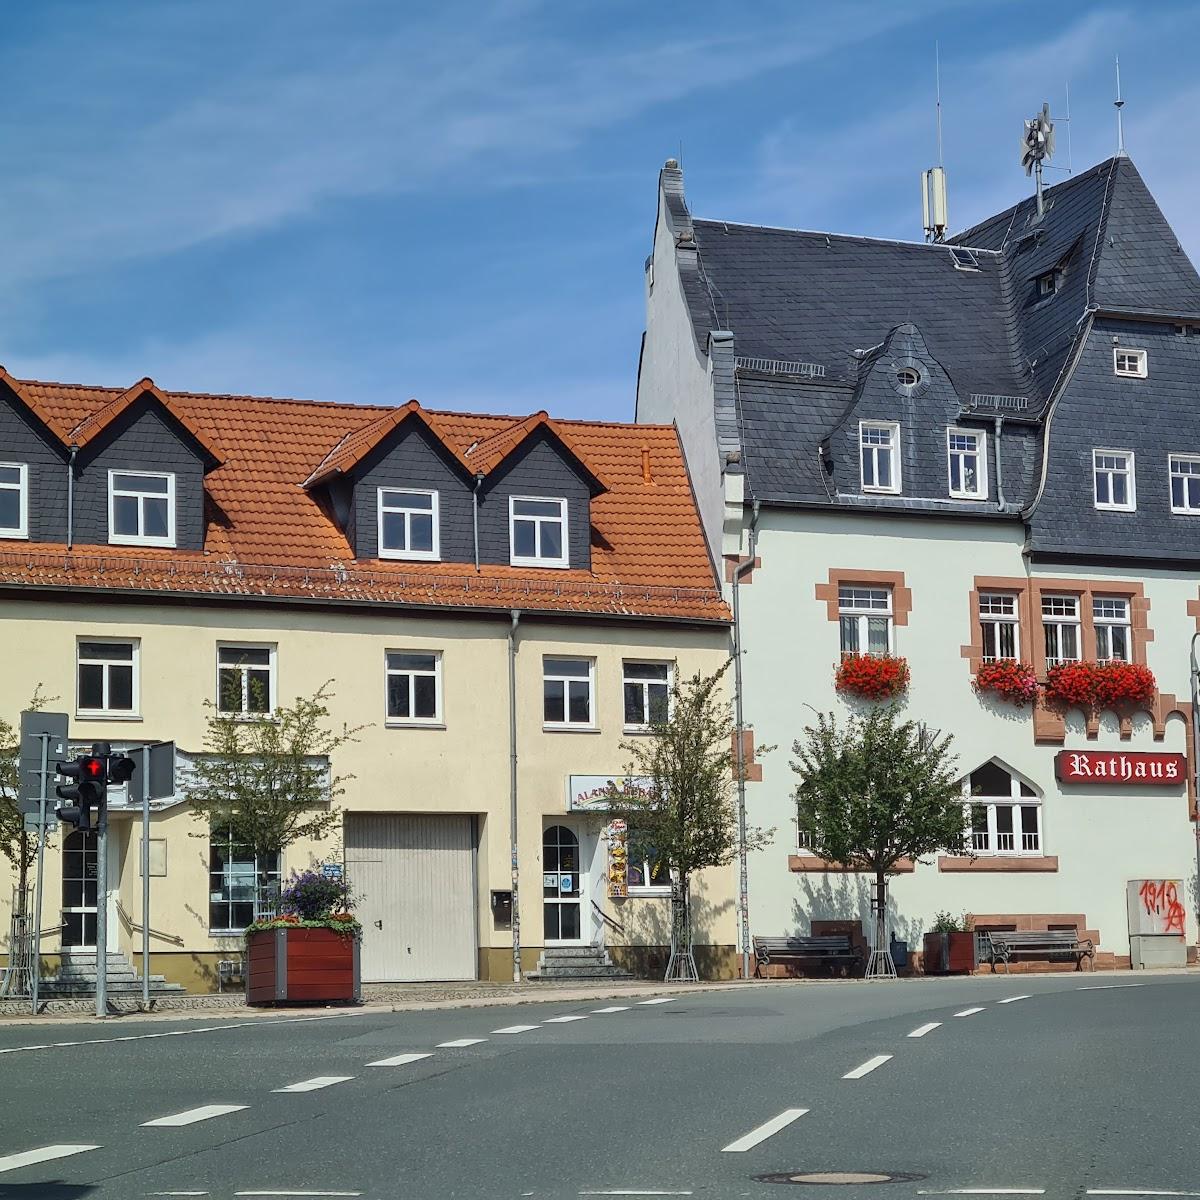 Restaurant "Hotel Fabrice" in Bad Klosterlausnitz